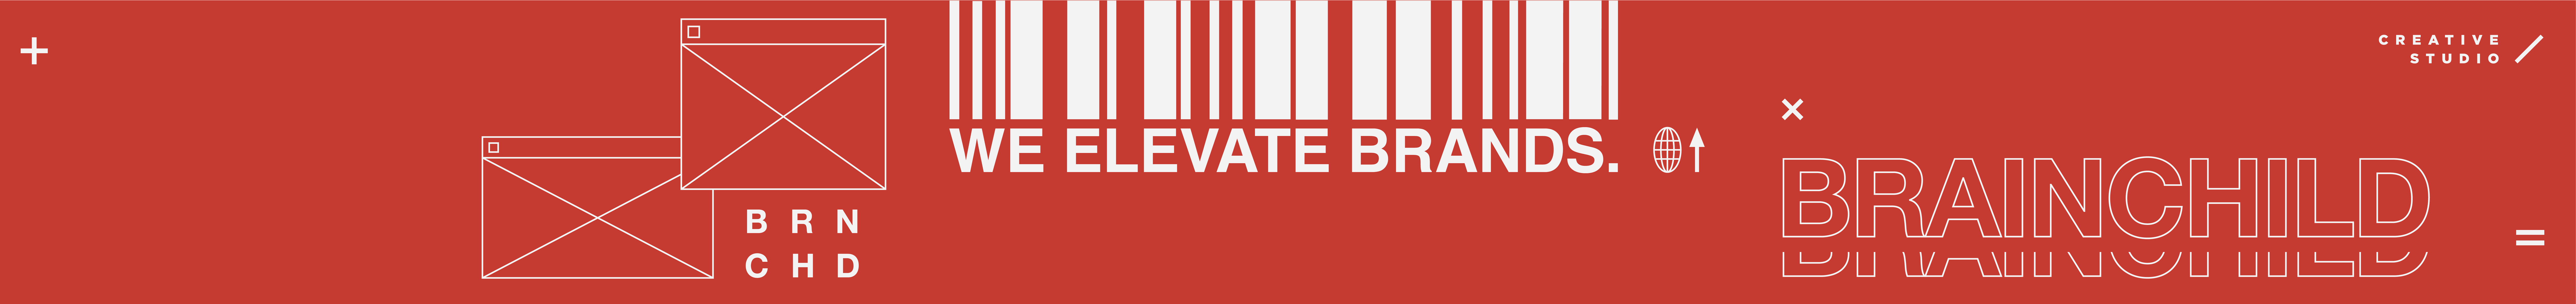 Brainchild Creative's profile banner